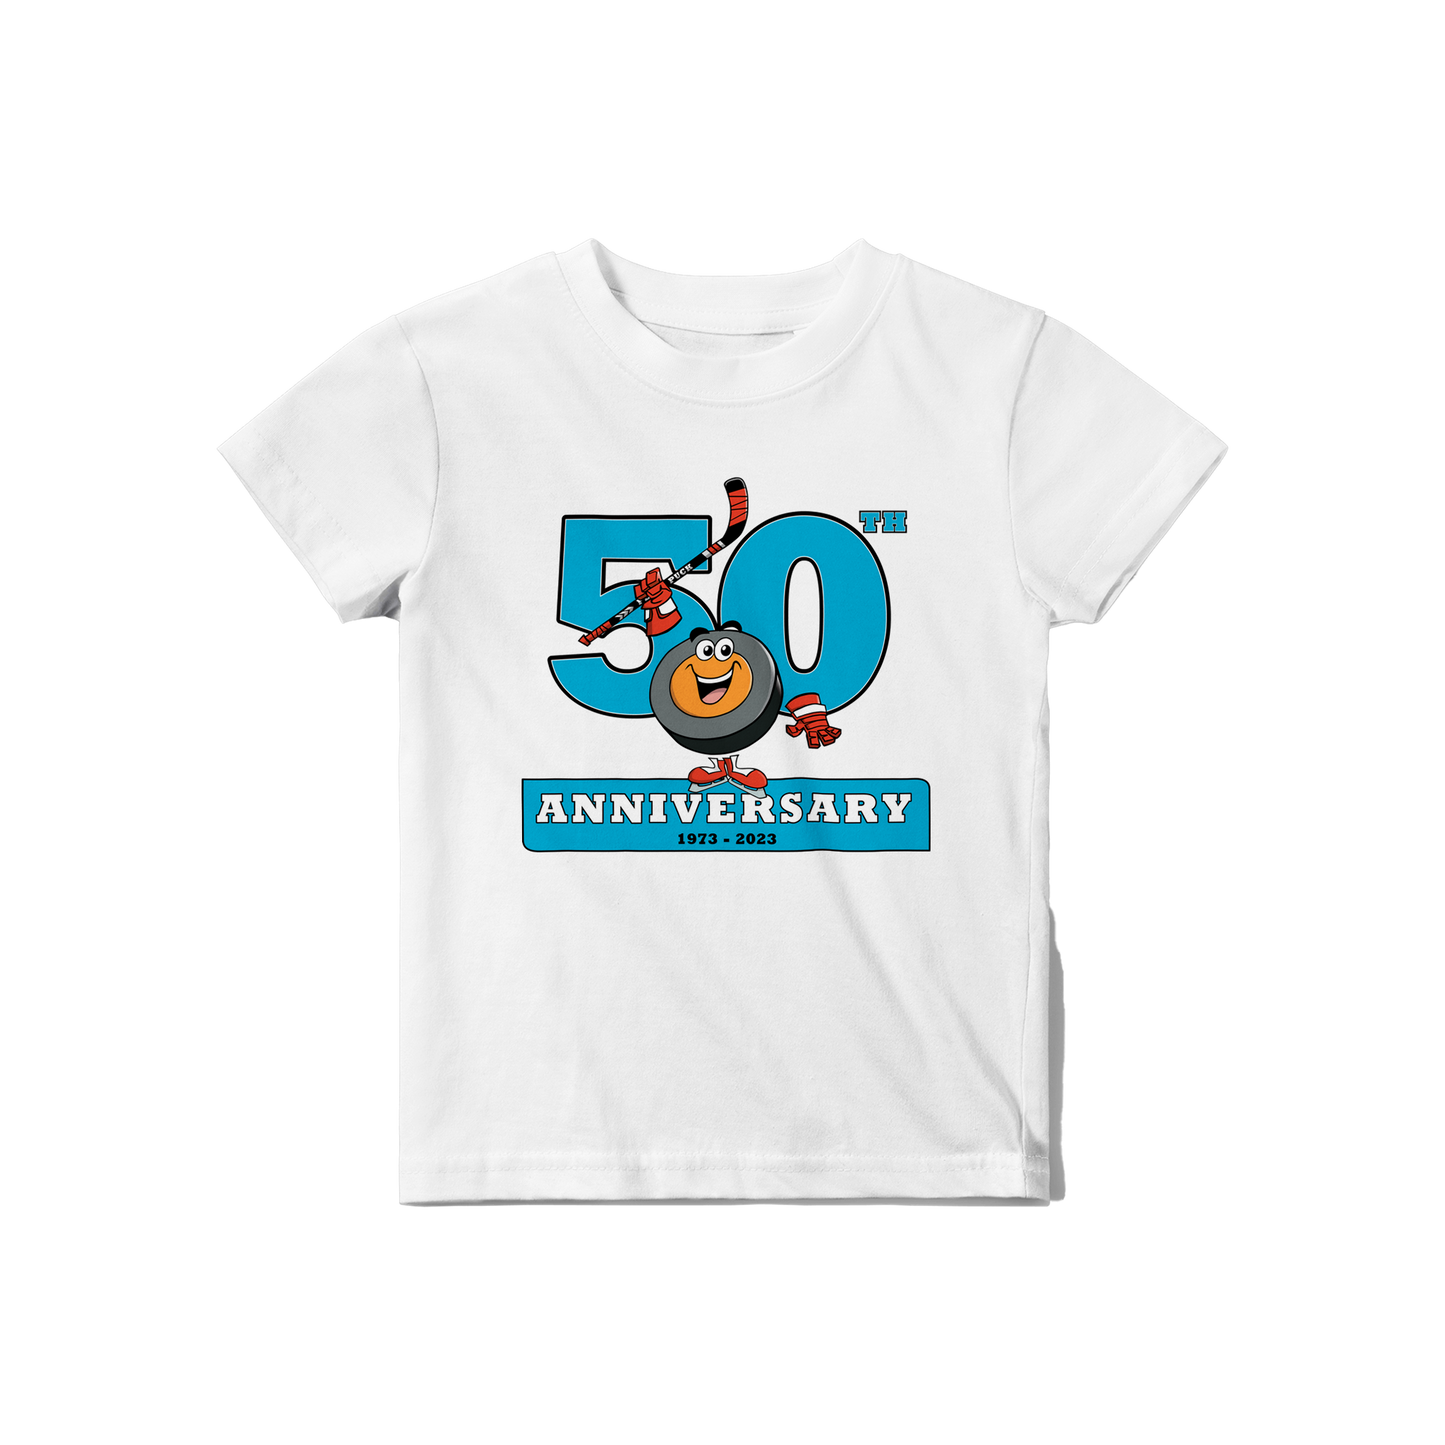 Peter's 50th Anniversary Classic Baby Crewneck T-shirt